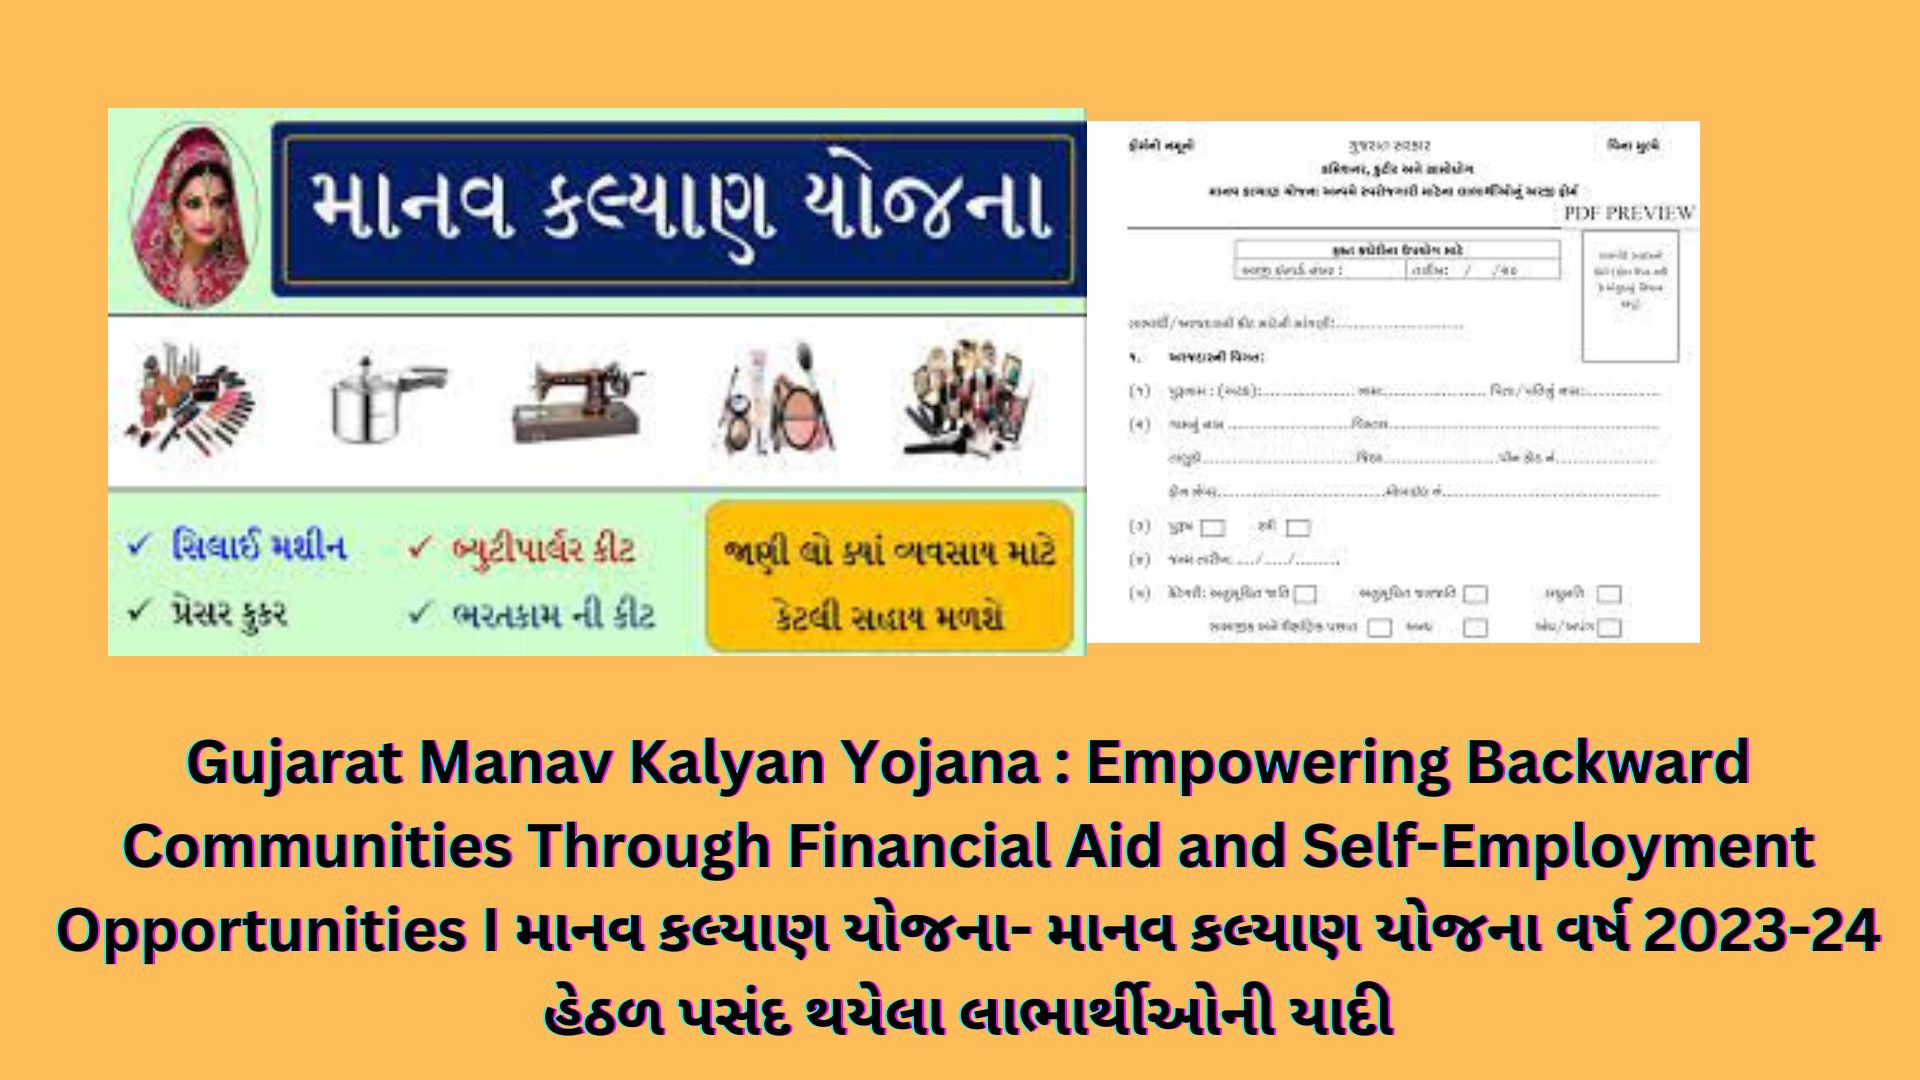 Gujarat Manav Kalyan Yojana : Empowering Backward Communities Through Financial Aid and Self-Employment Opportunities I માનવ કલ્‍યાણ યોજના- માનવ કલ્યાણ યોજના વર્ષ 2023-24 હેઠળ પસંદ થયેલા લાભાર્થીઓની યાદી